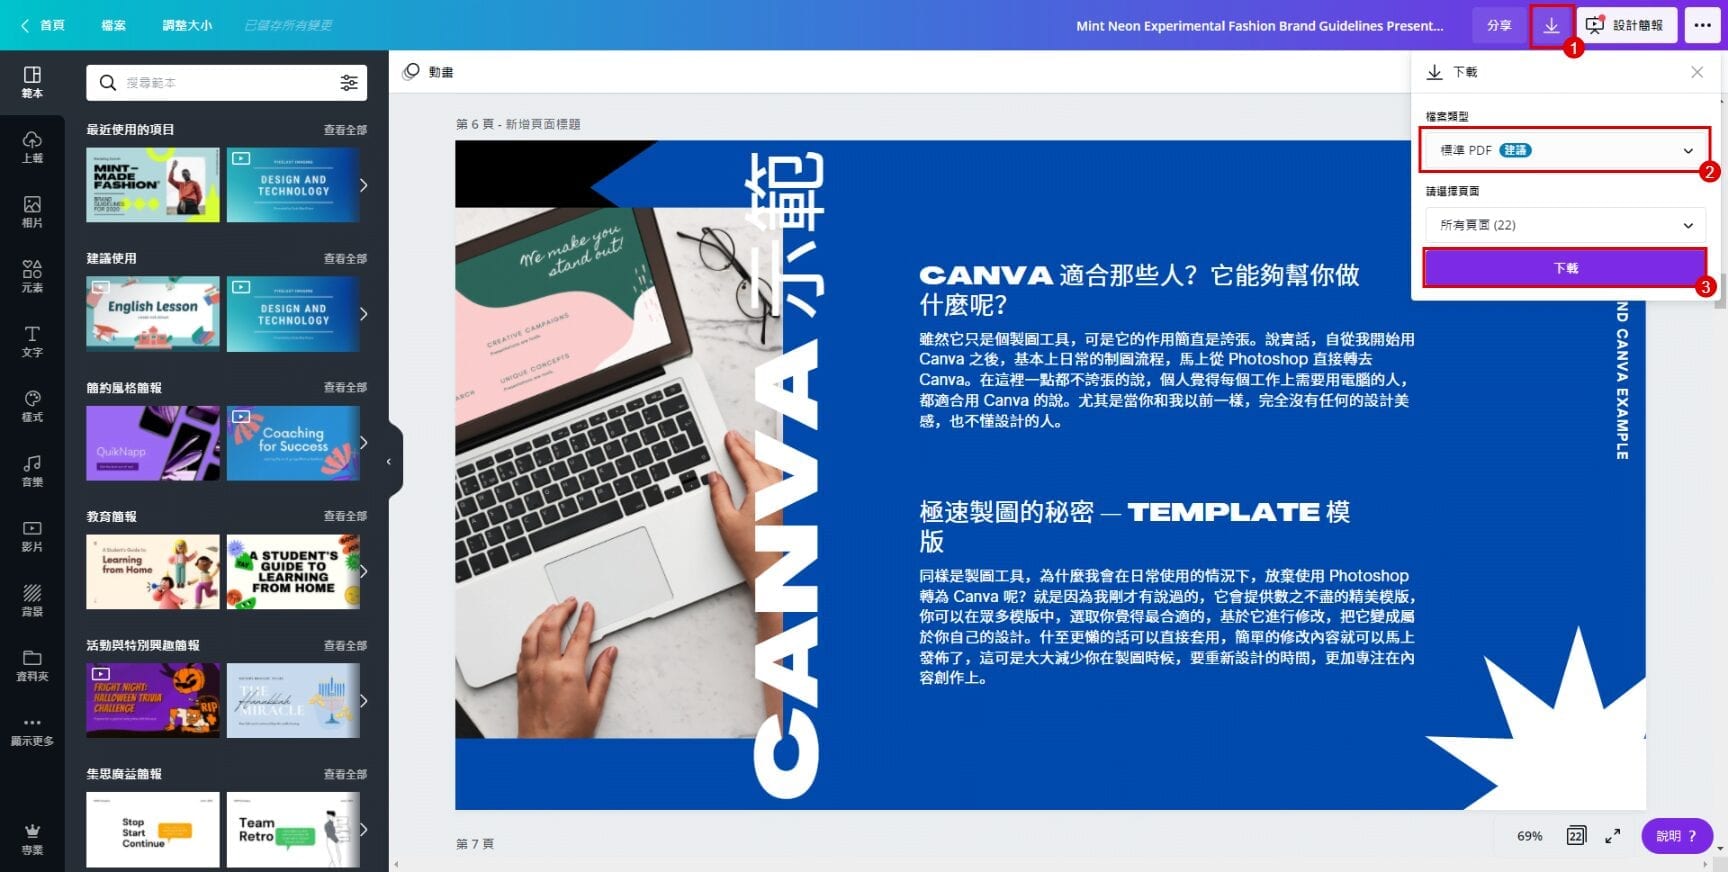 Canva 教學 – 10 分鐘極速上手的免費線上製圖神器，自己設計出高質圖片 | 軟體推薦 |